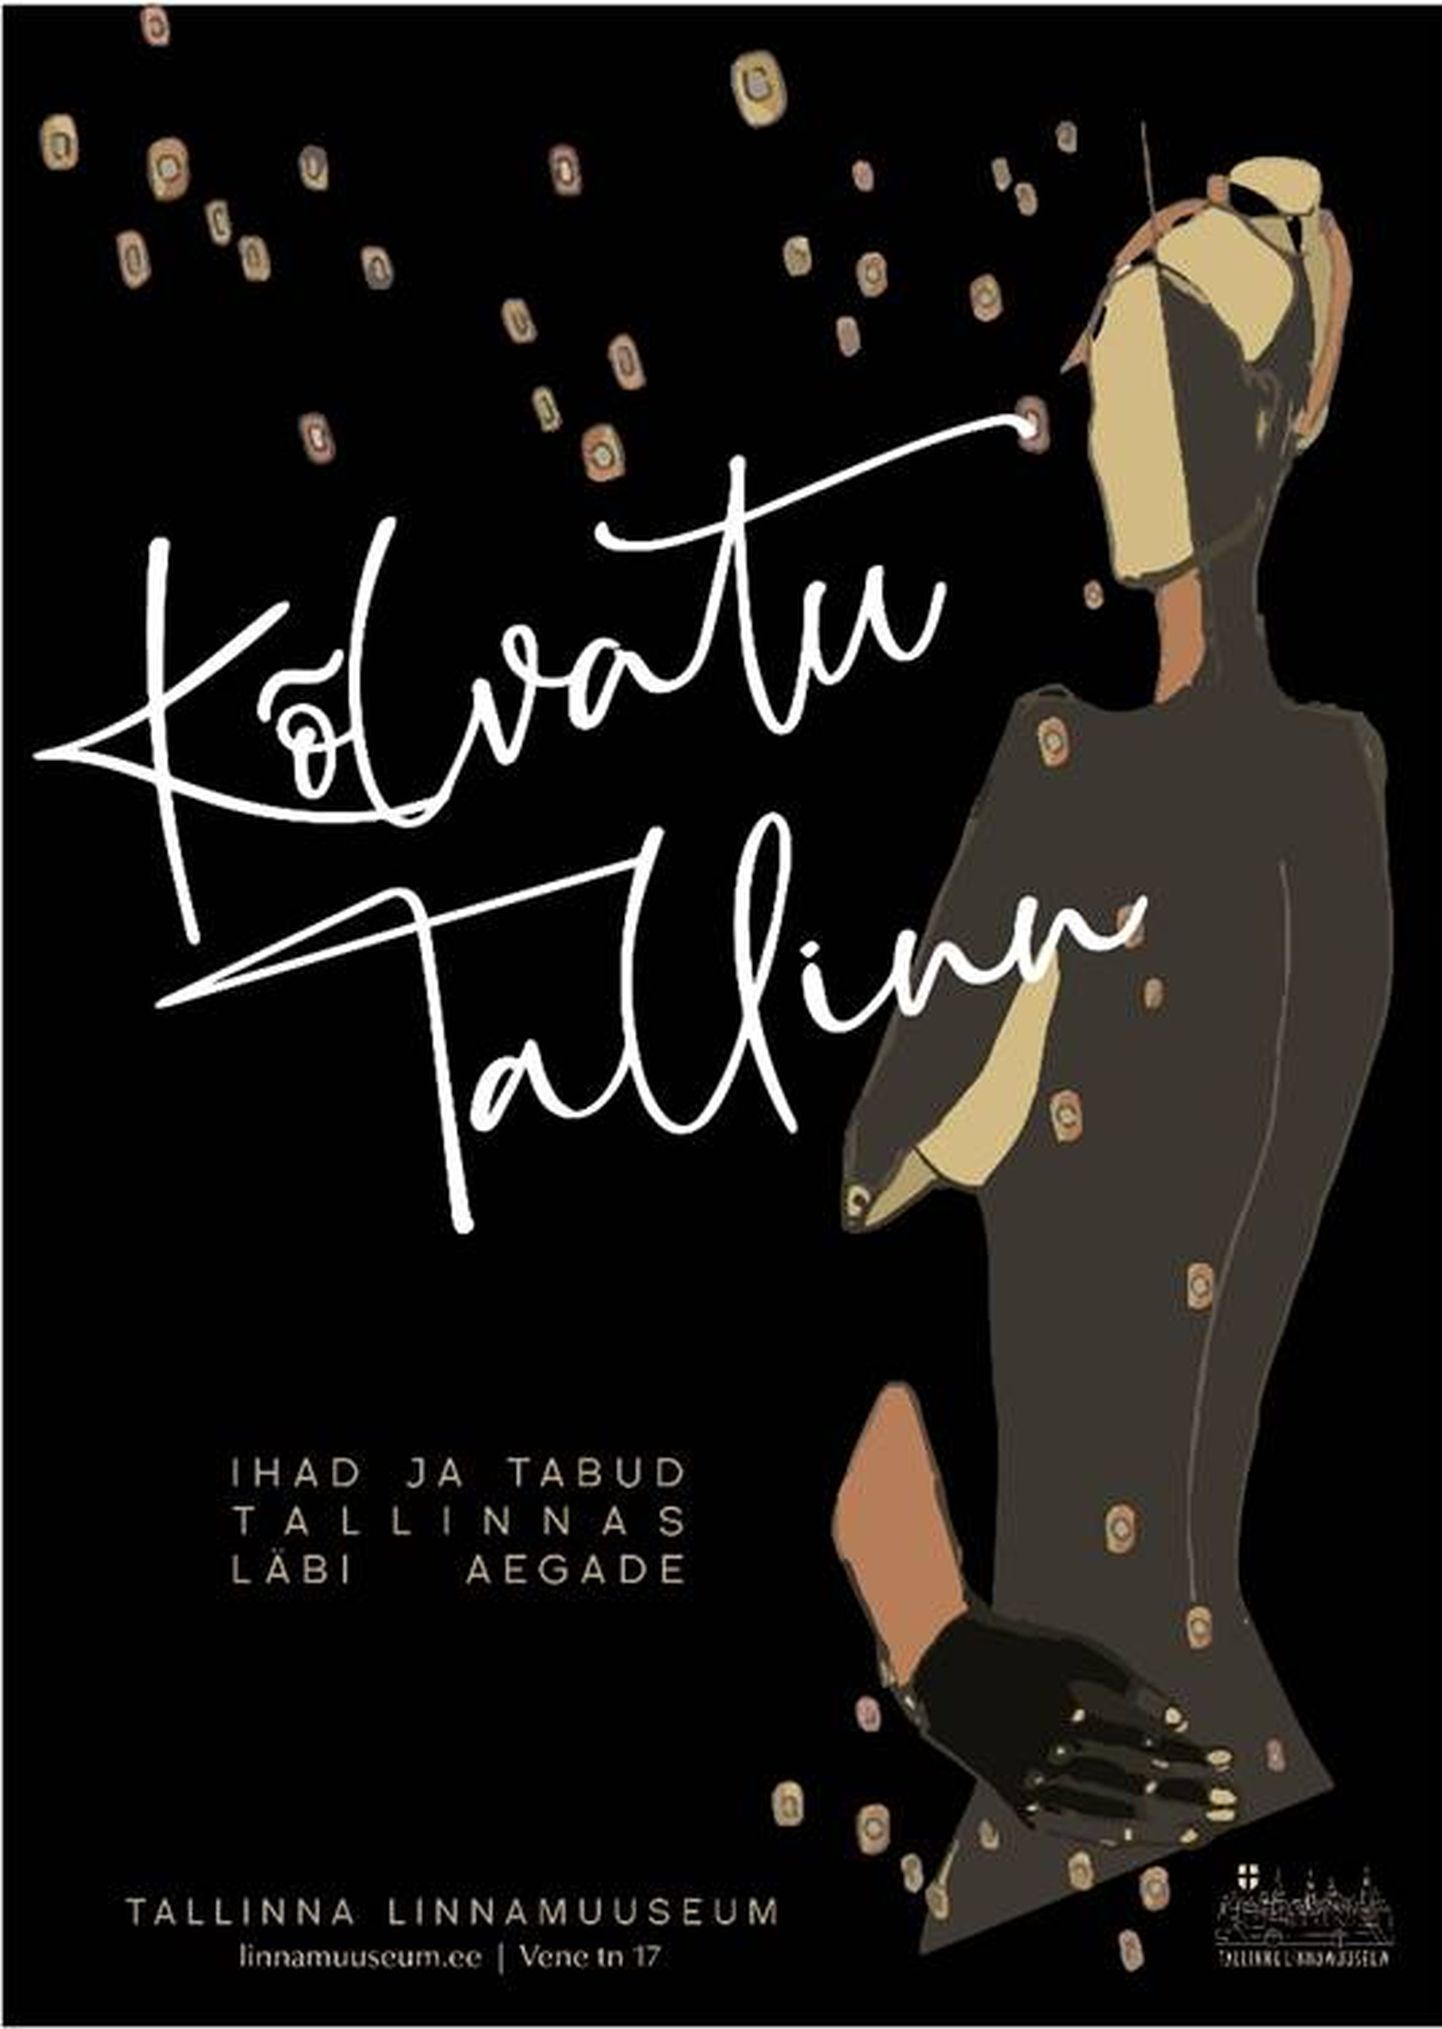 Näituse "Kõlvatu Tallinn" plakat.